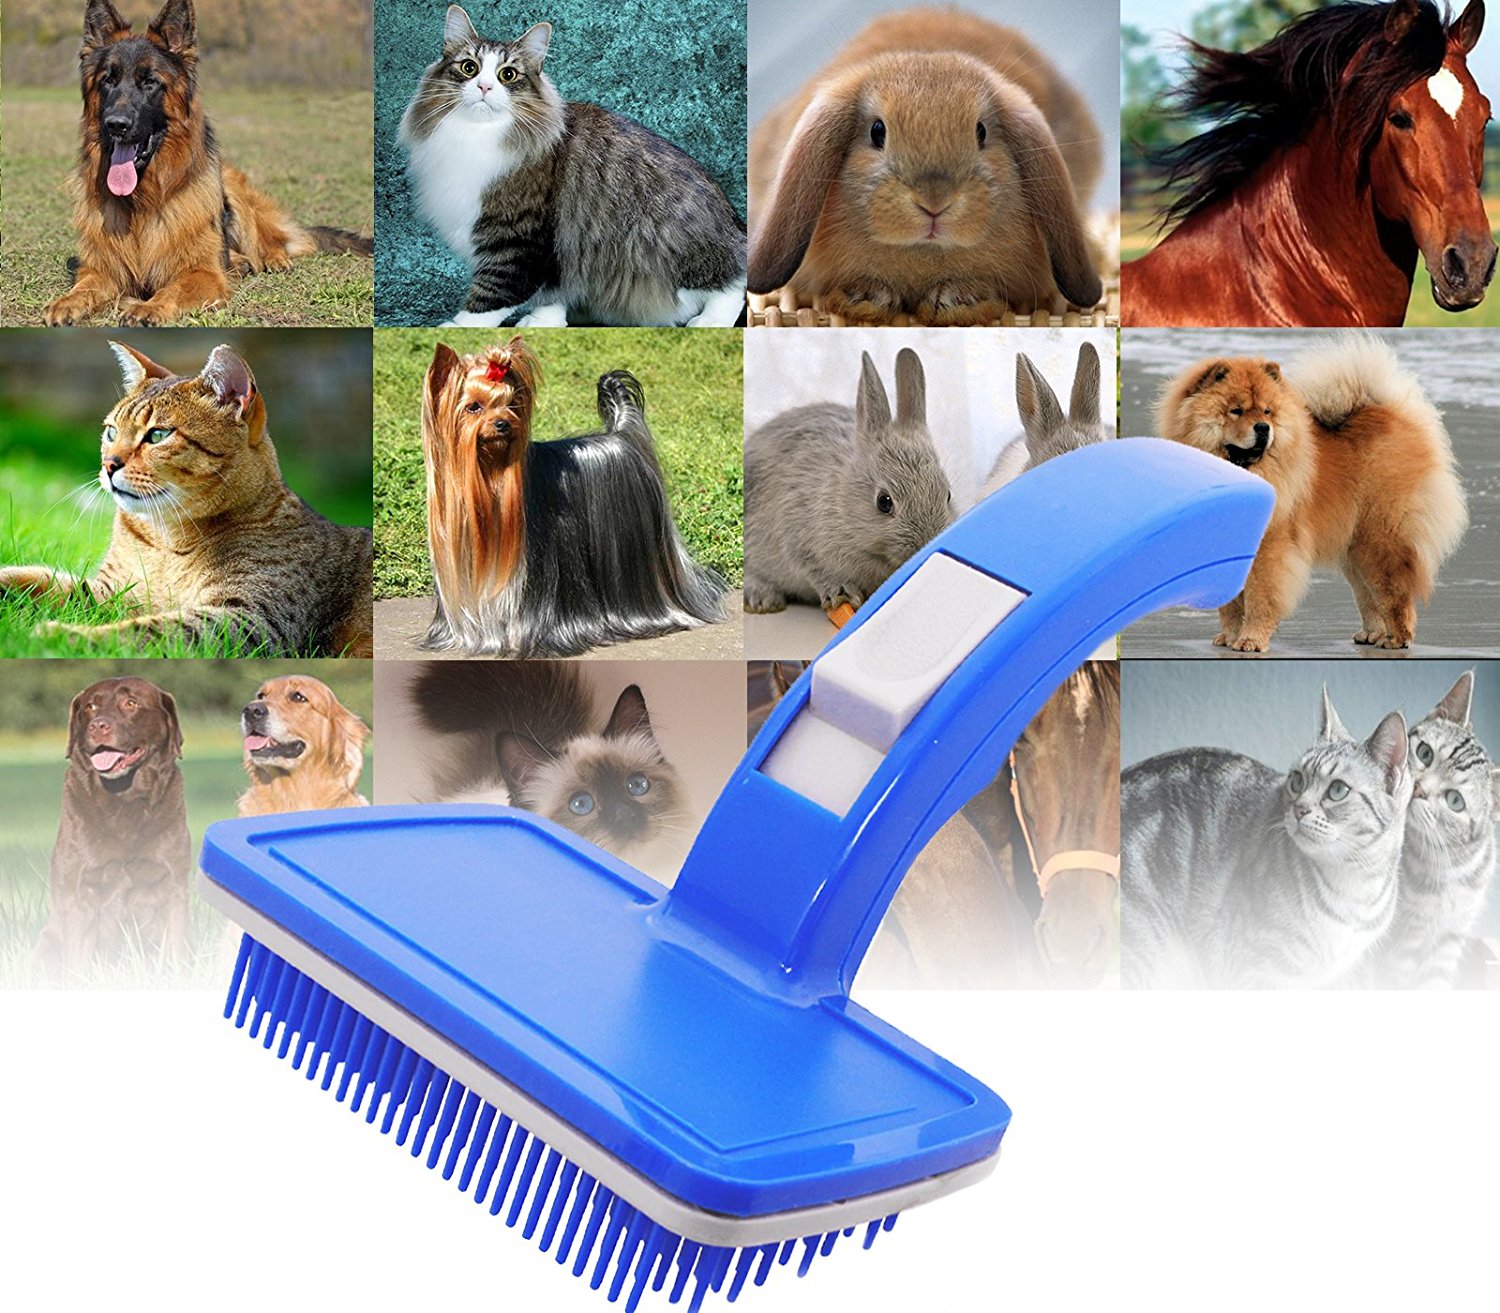 Self Cleaning pet brush